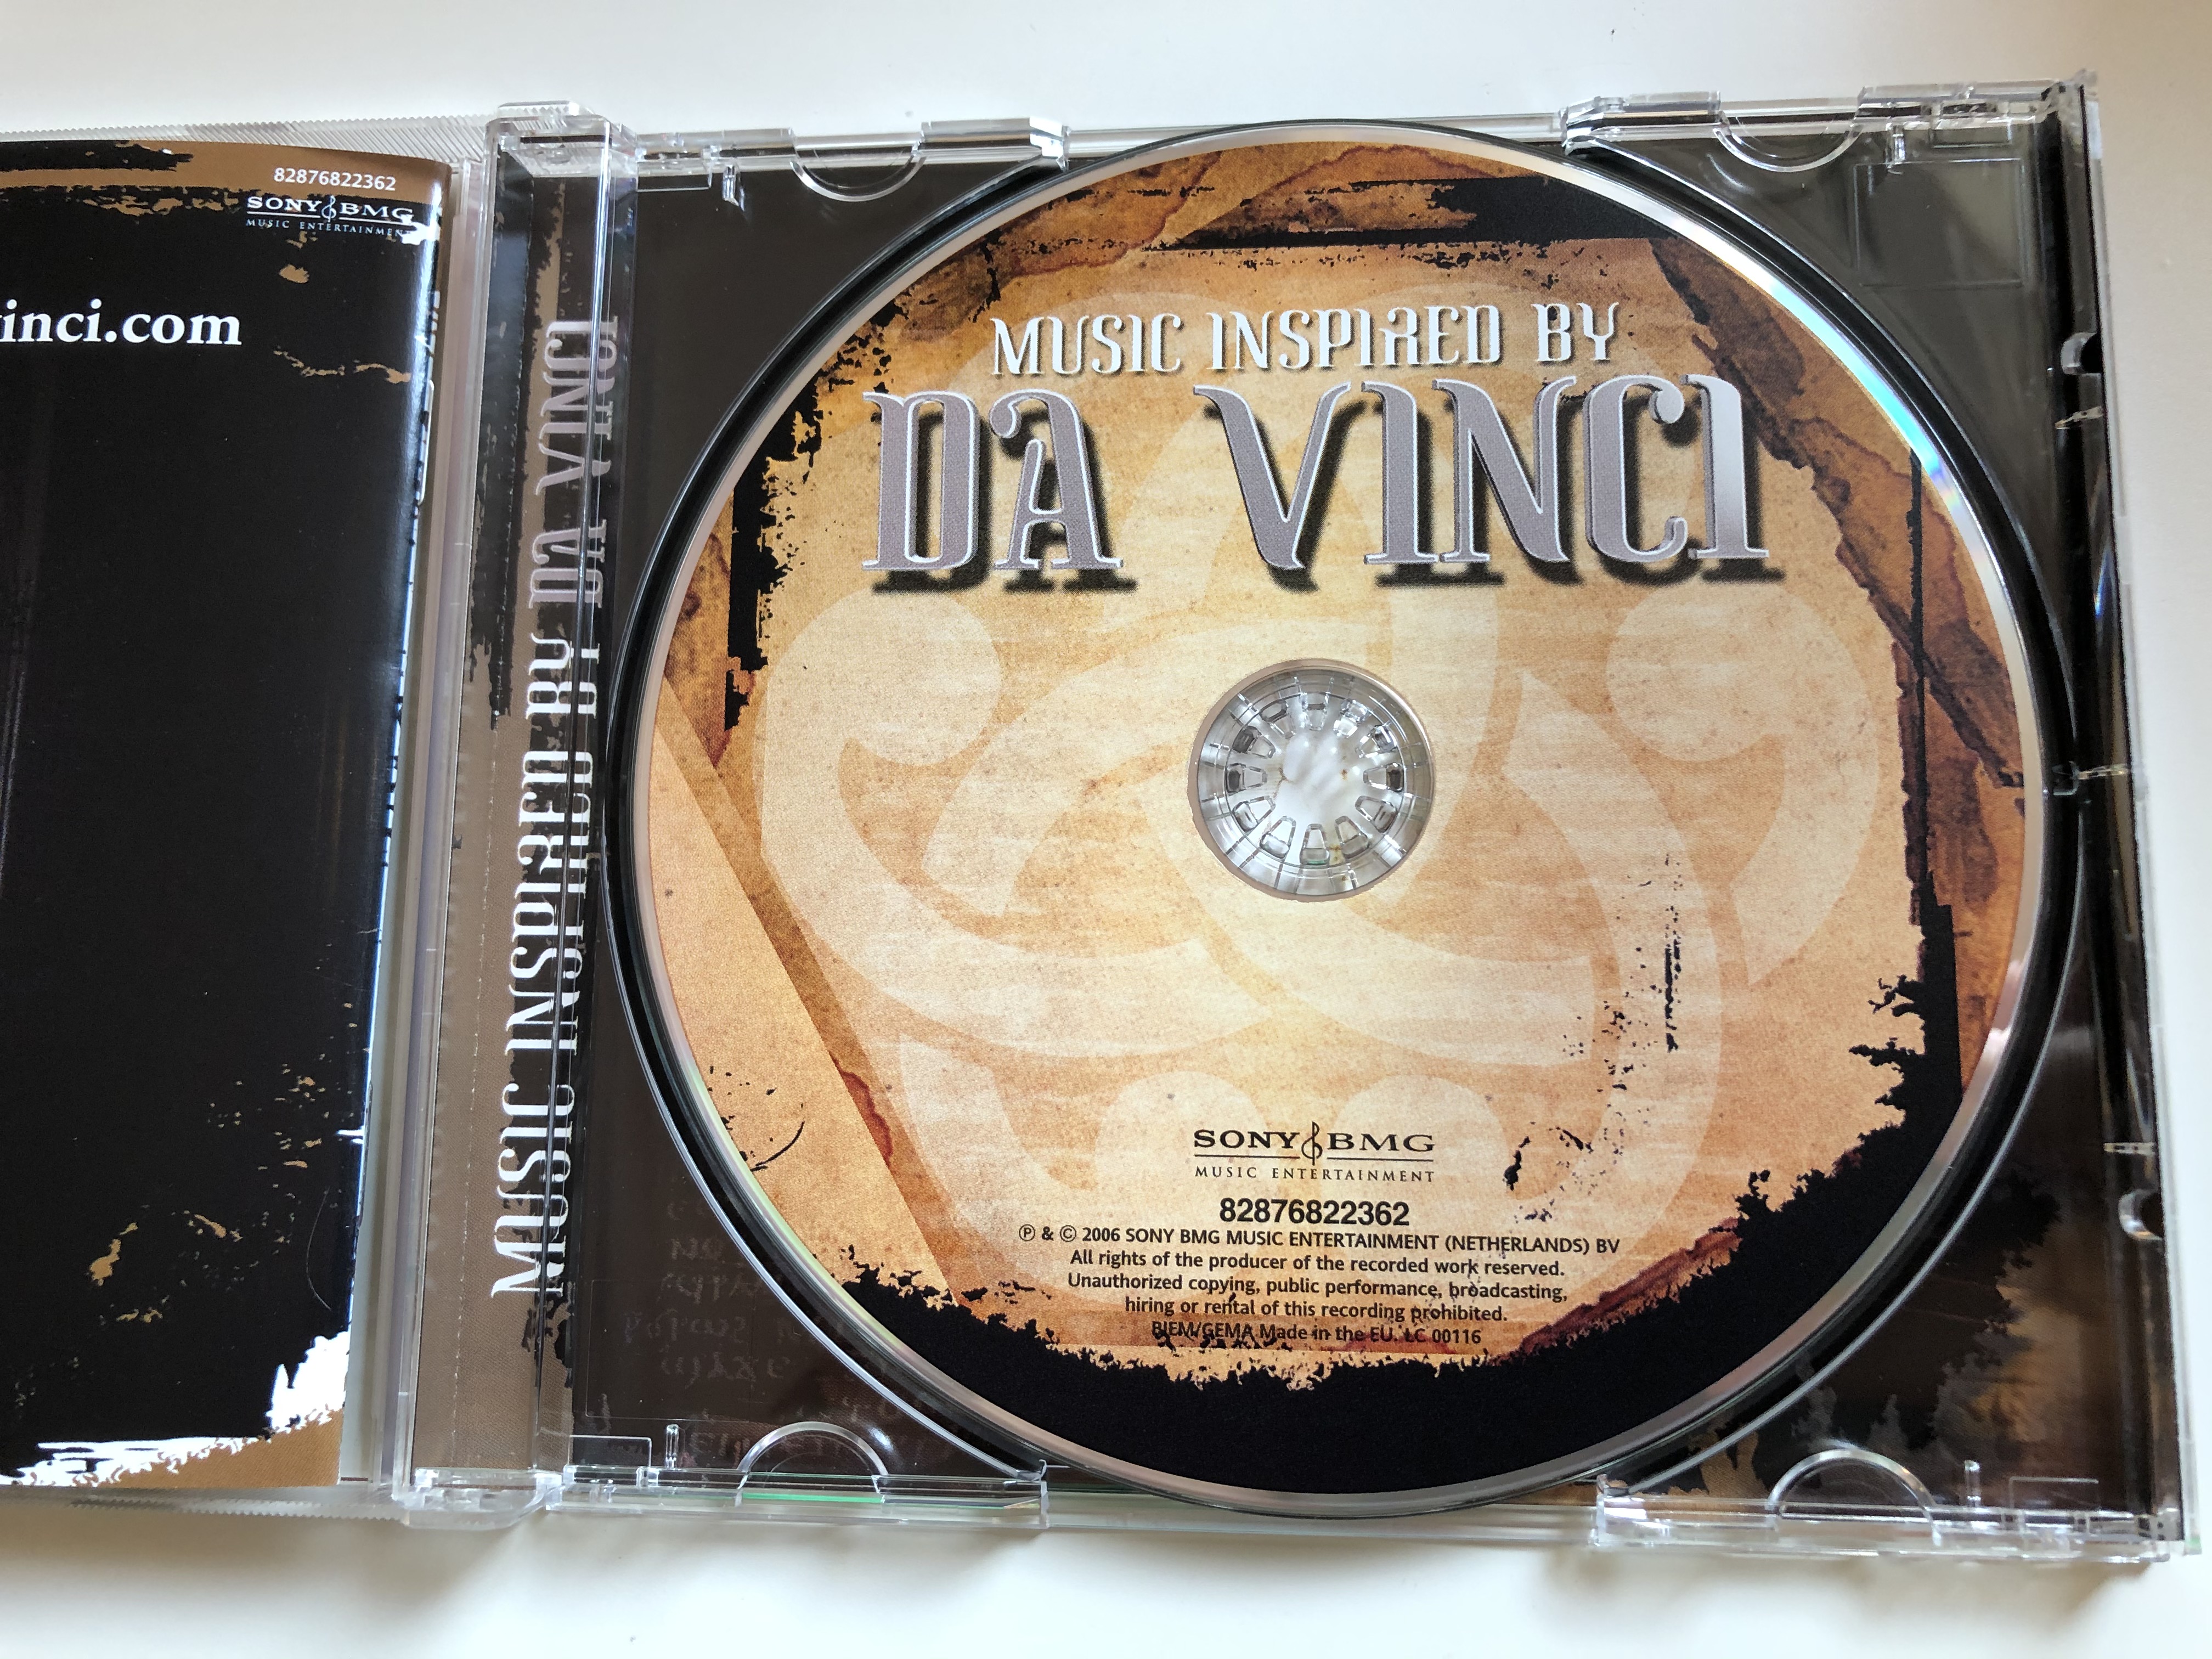 music-inspired-by-da-vinci-sony-bmg-music-entertainment-audio-cd-2006-82876822362-8-.jpg